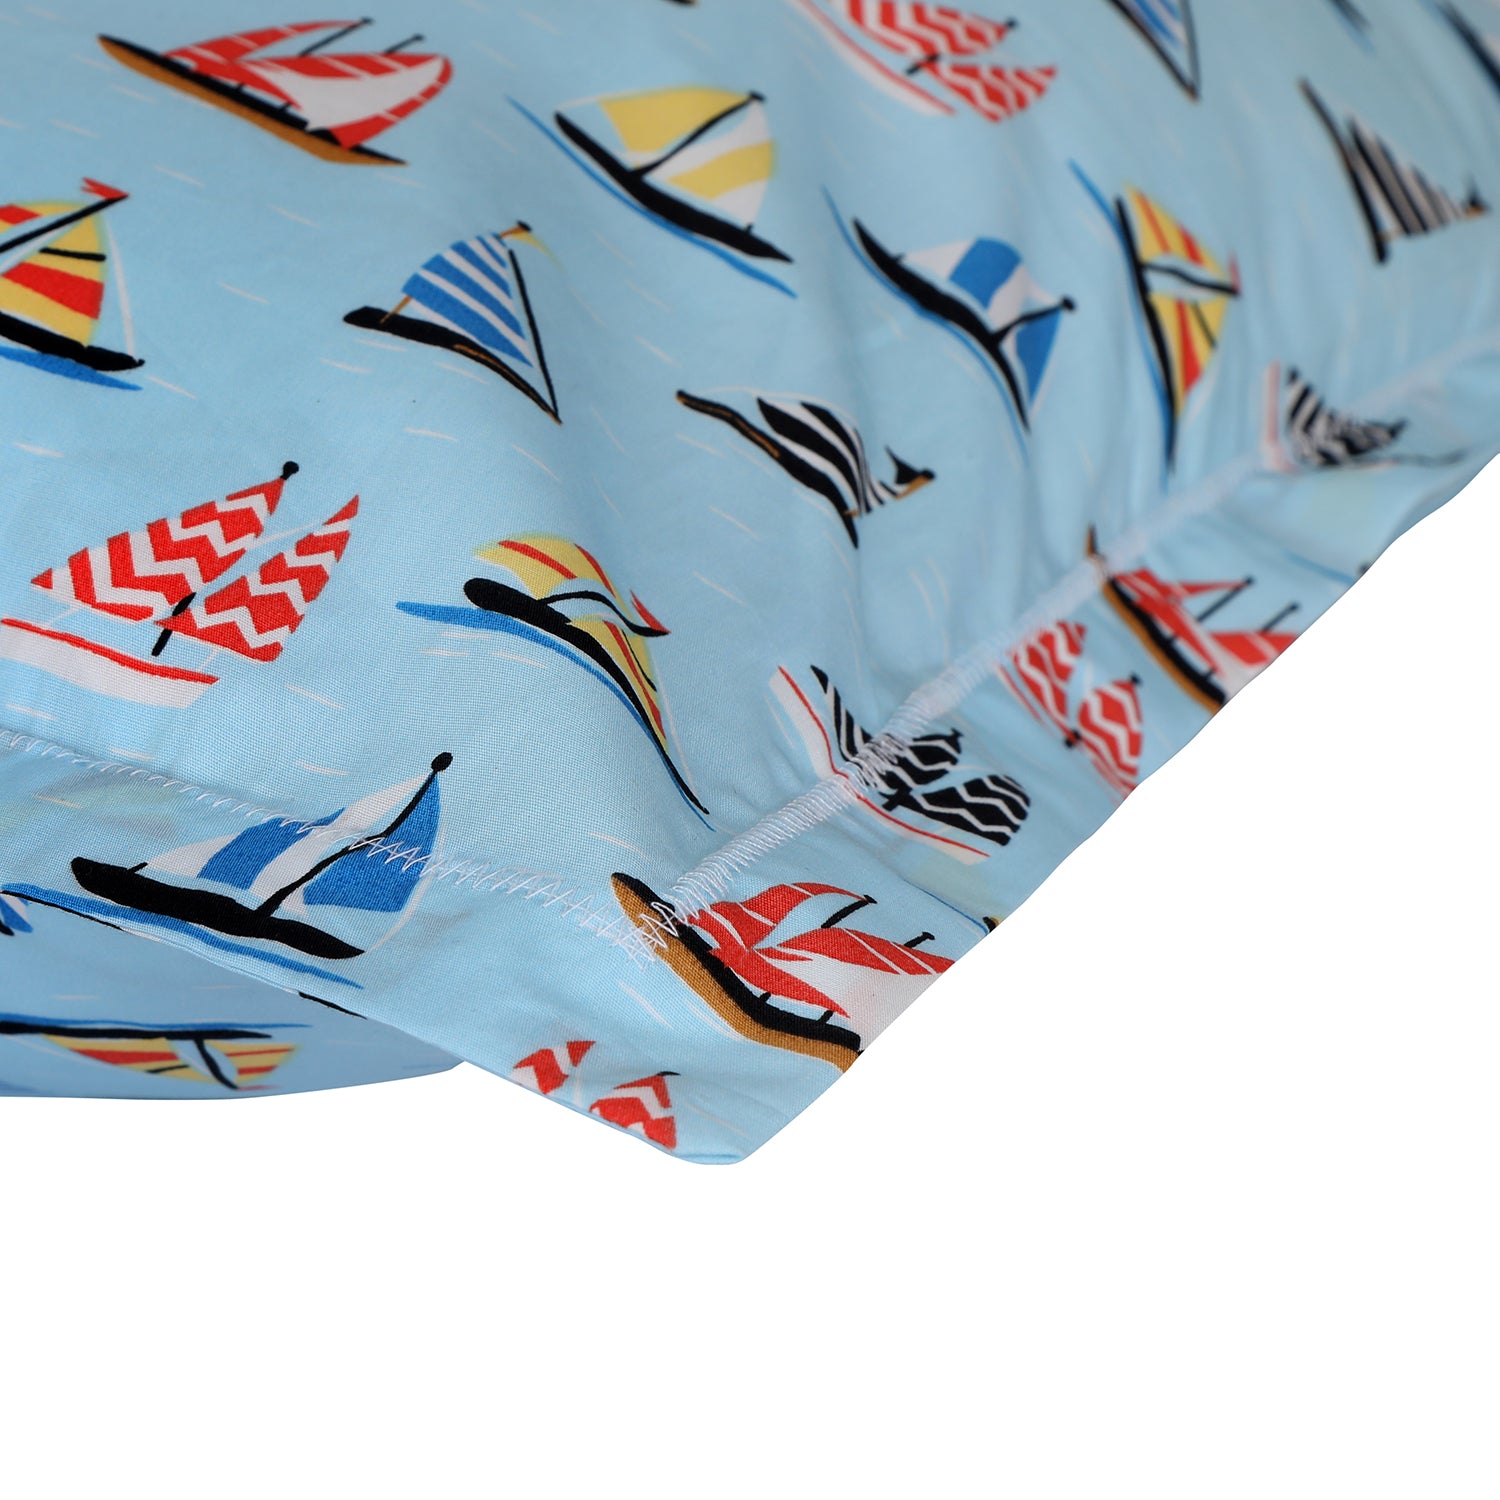 Bedsheet Set - Sailboat Bedsheet, Single/Double Bed Sizes Available